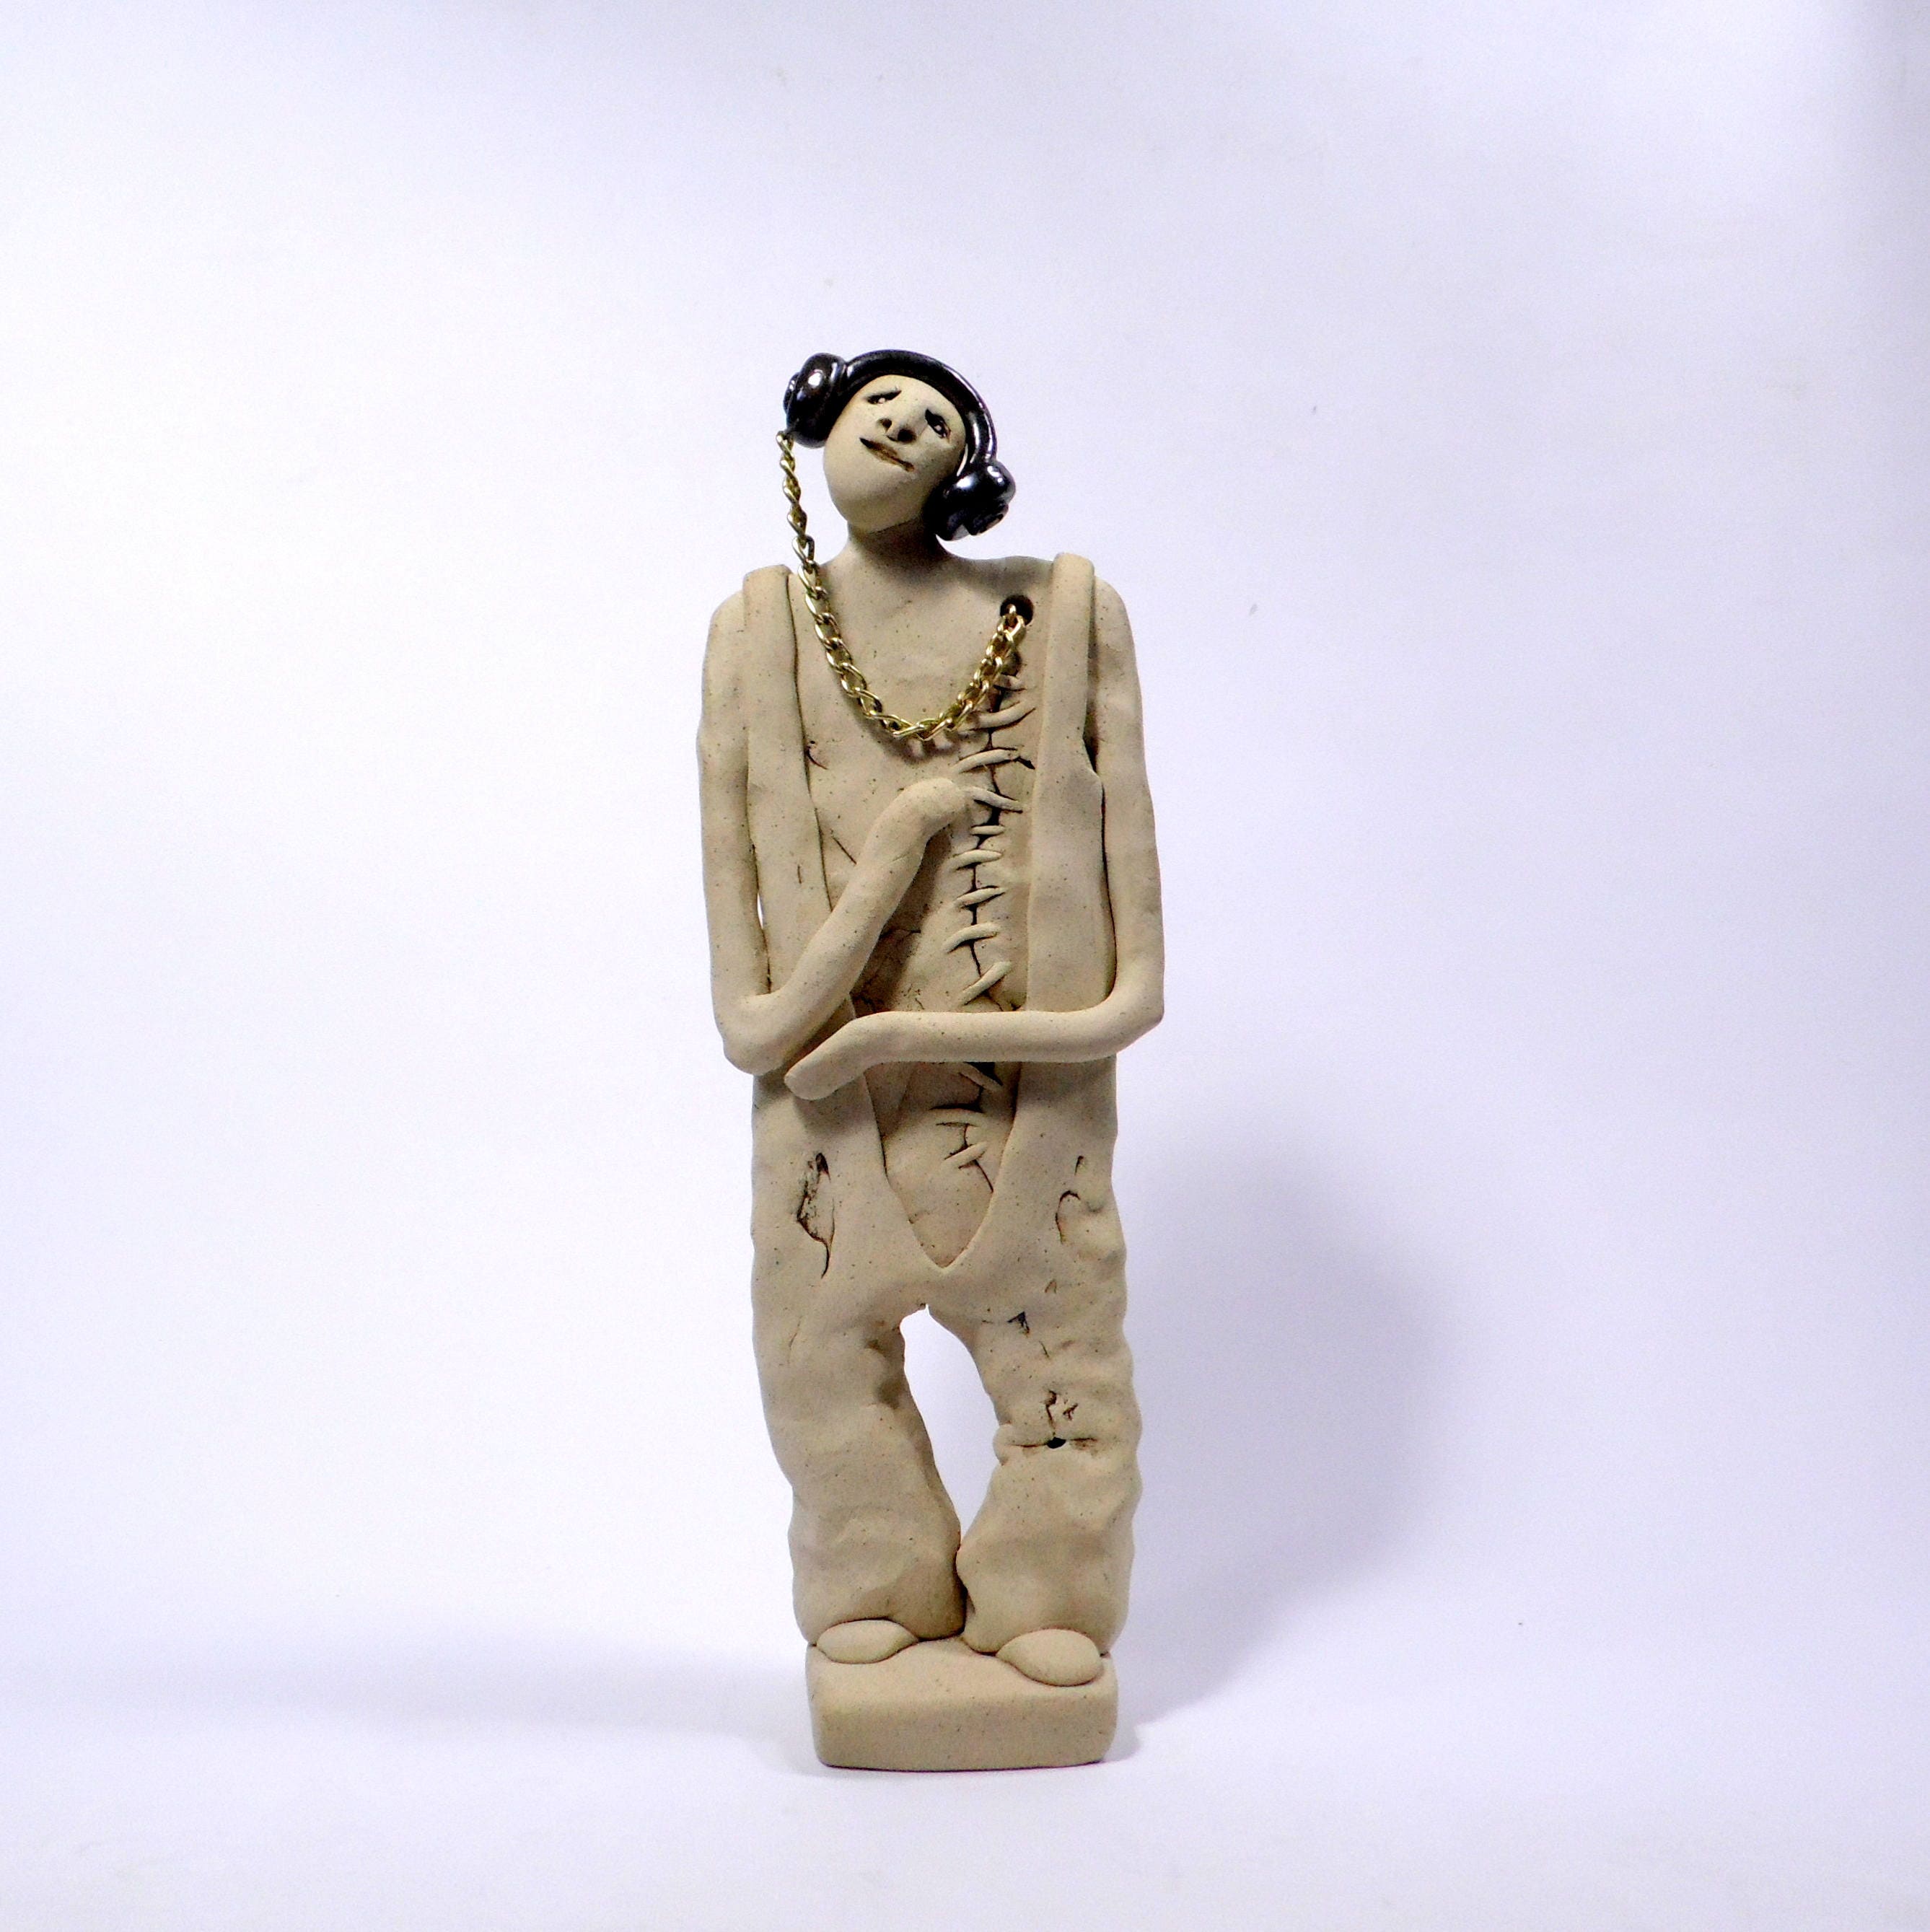 cool sculptures - Cool Ceramic Sculptures, CREATIVE MASTERPIECES